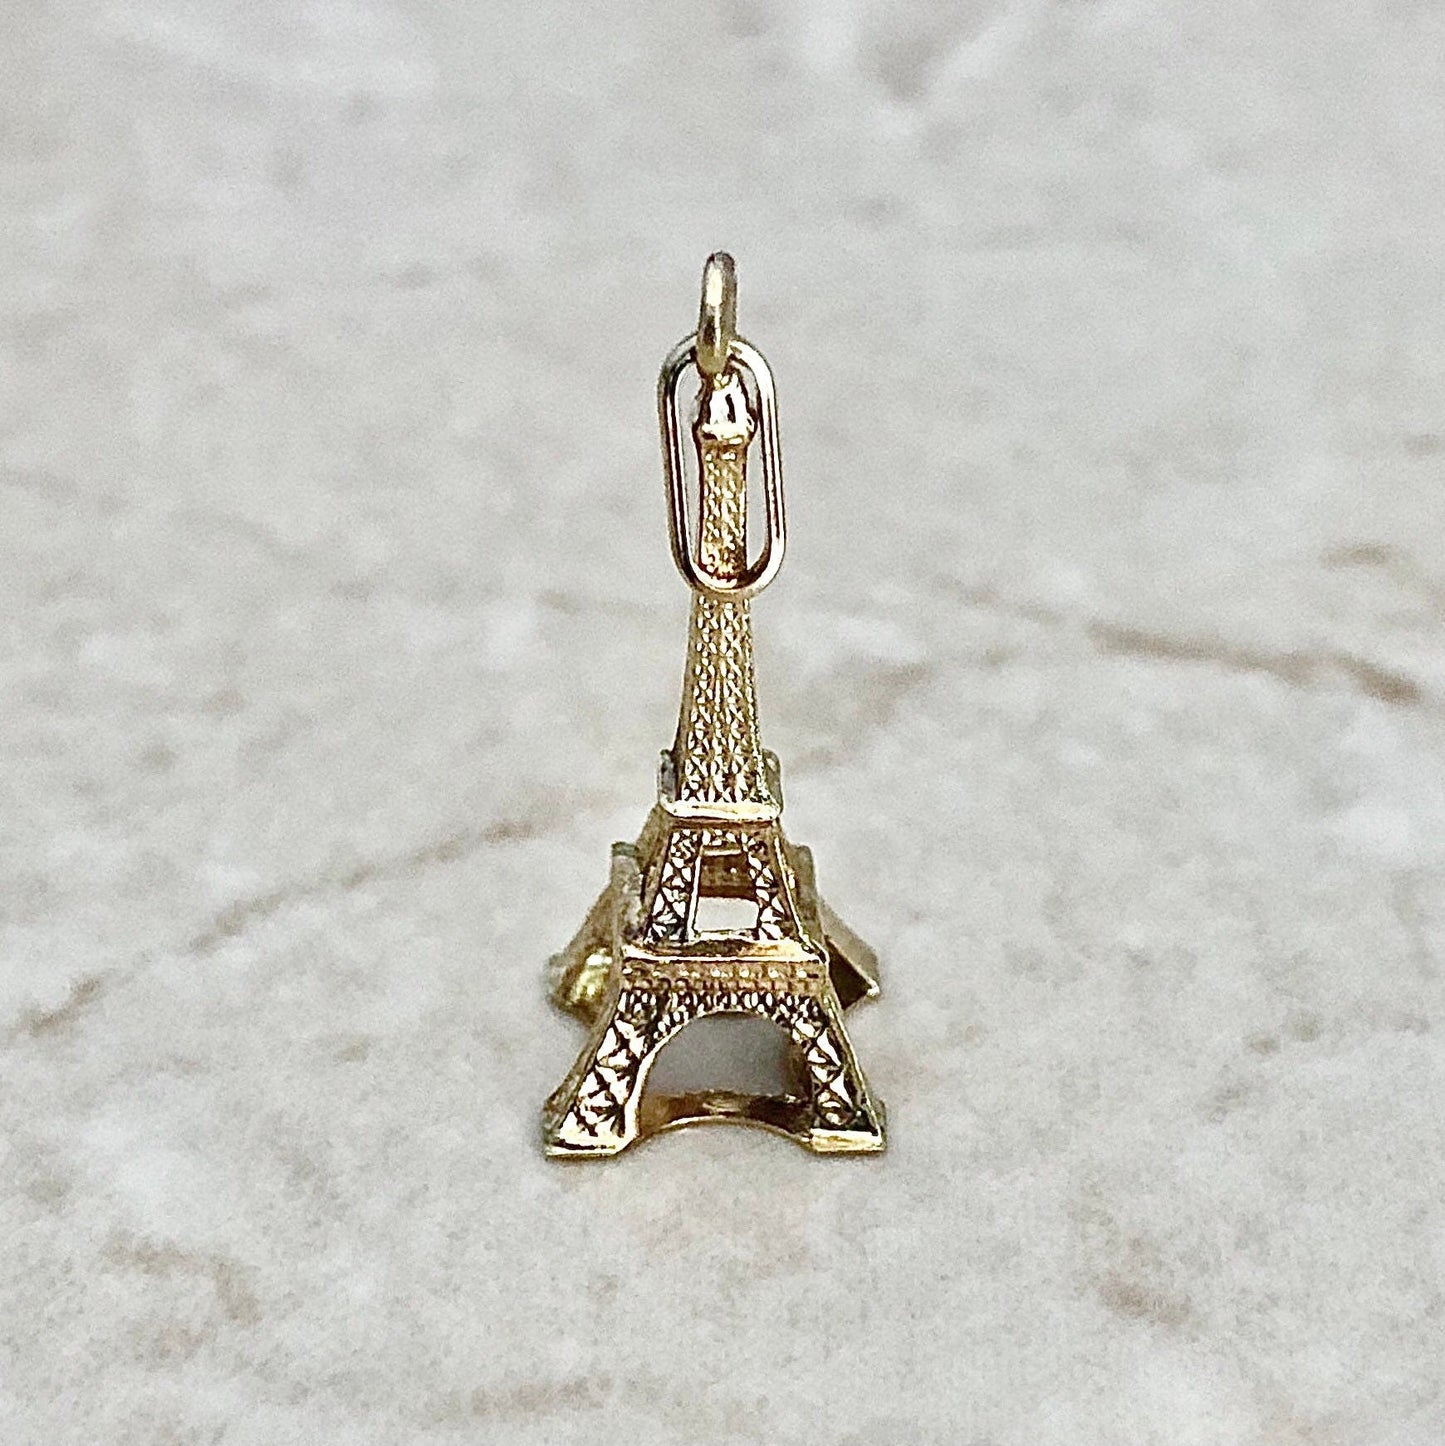 Rare Vintage French 22 Karat Yellow Gold Eiffel Tower Charm Pendant Necklace - Unisex Pendant - Birthday Gift - France Charm - Paris Charm